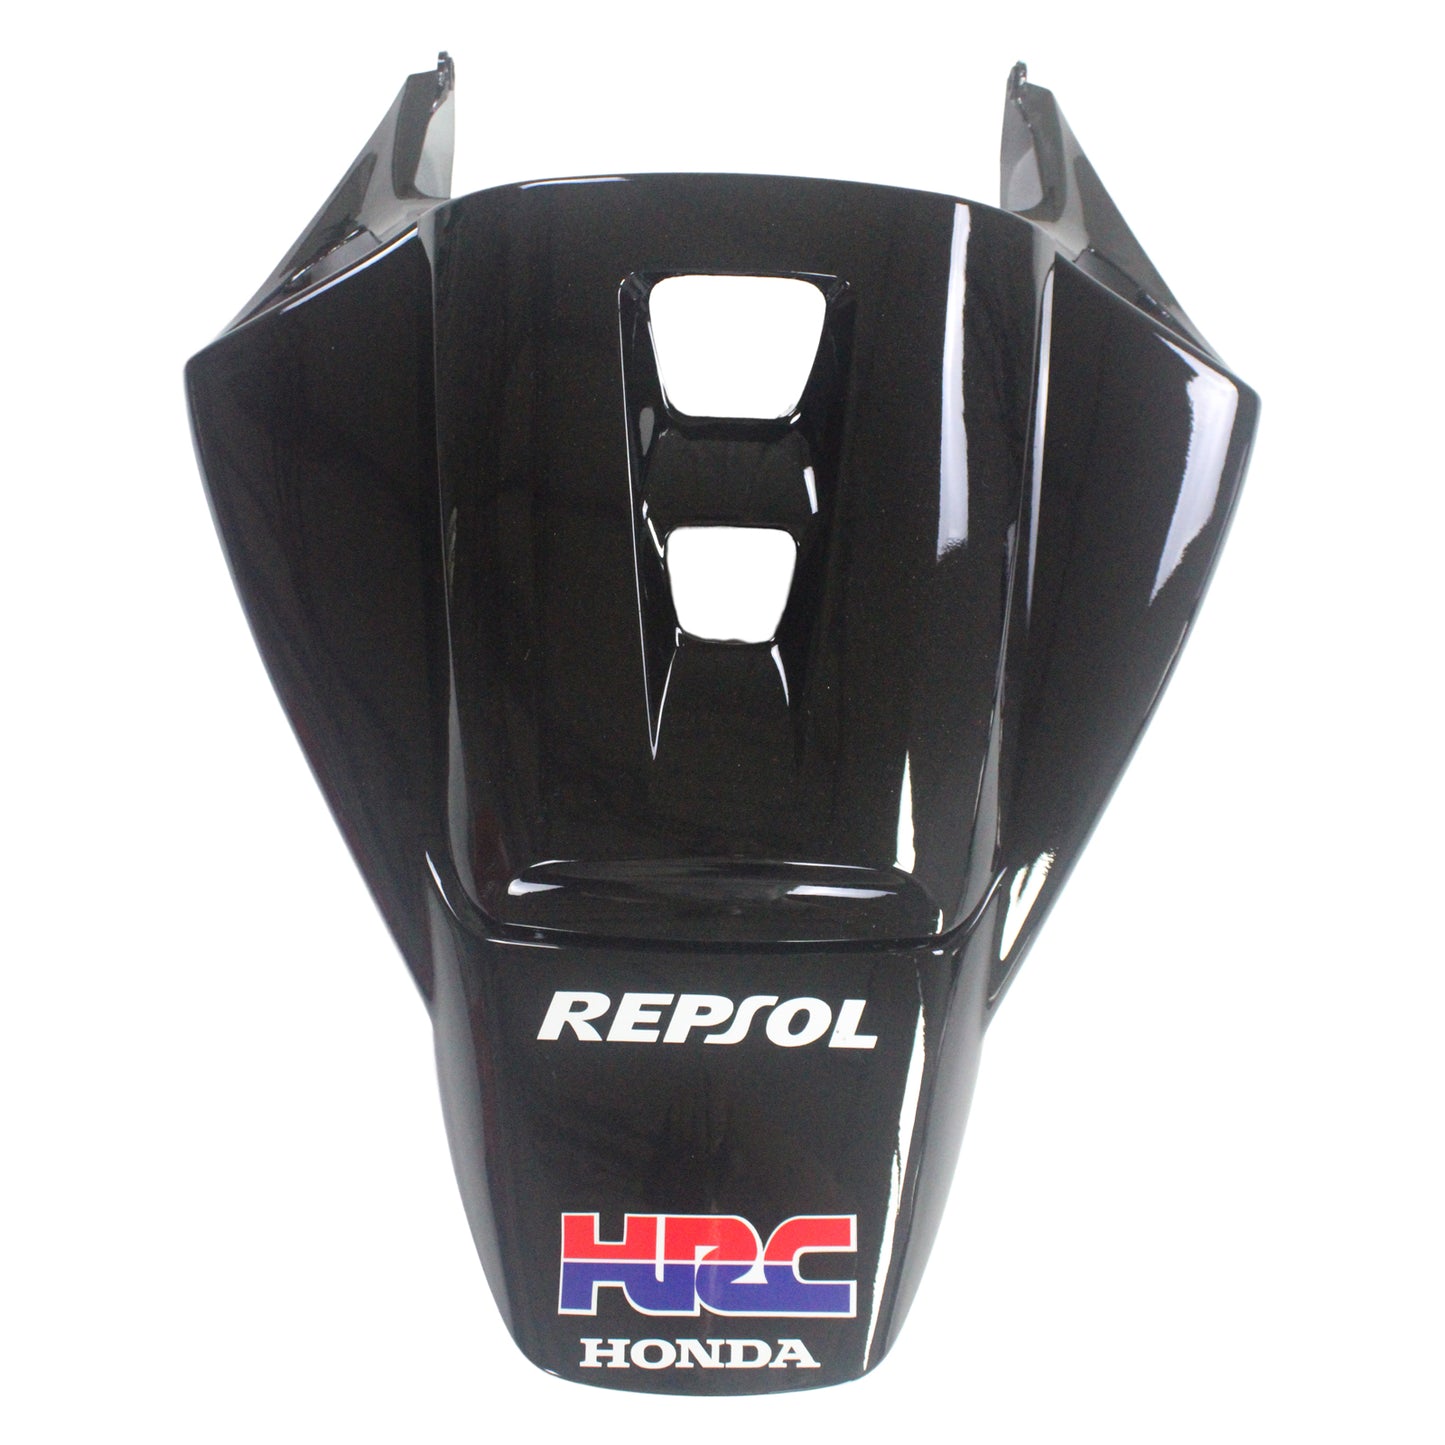 Amotopart Verkleidung Honda CBR1000RR 2004-2005 Verziehung Repsol Racing Black Silver Fairing Kit